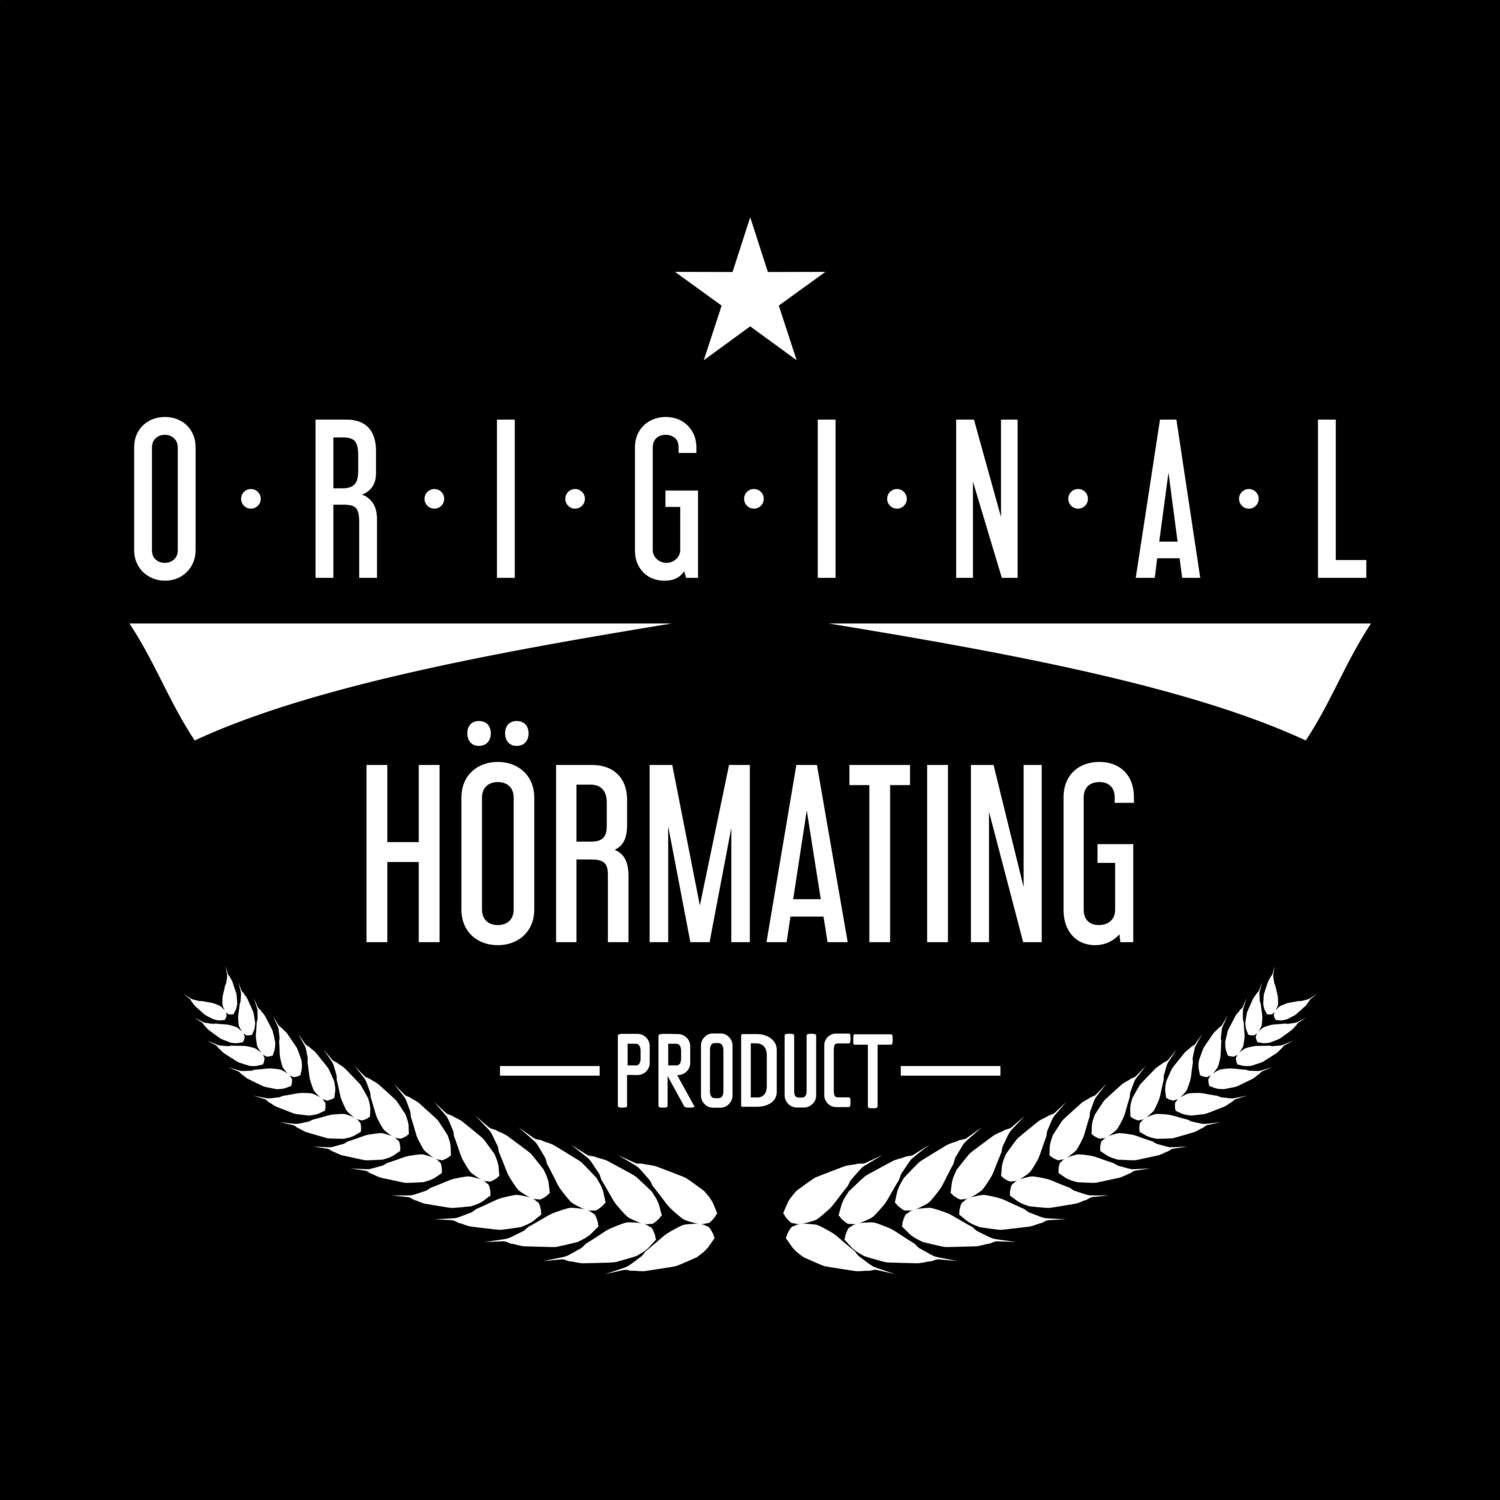 Hörmating T-Shirt »Original Product«